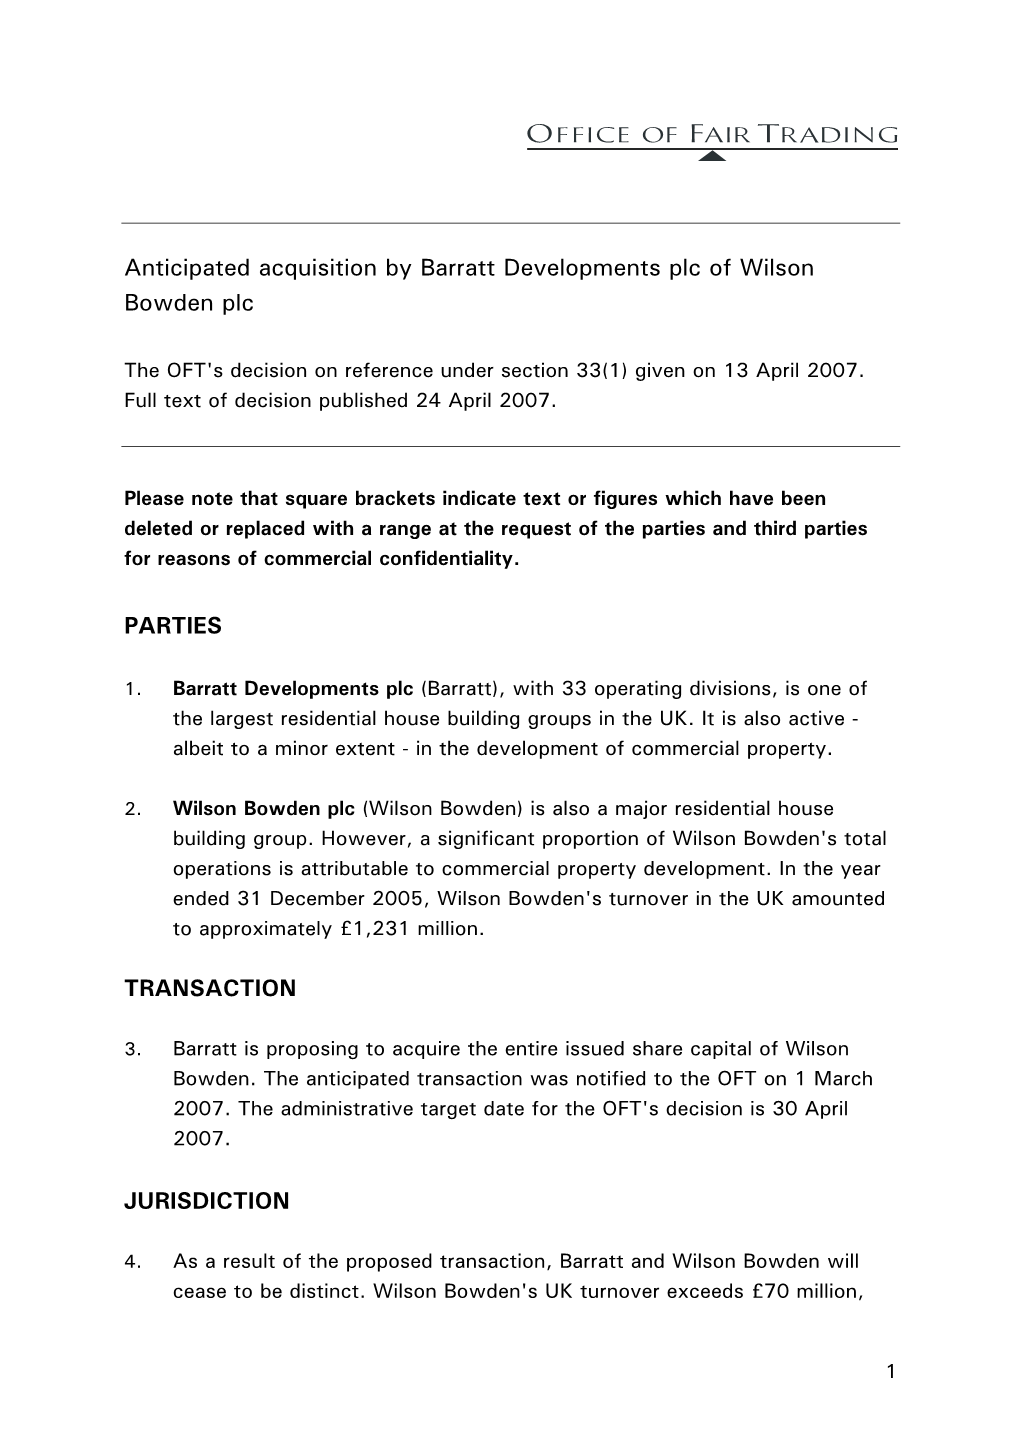 Anticipated Acquisition by Barratt Developments Plc of Wilson Bowden Plc